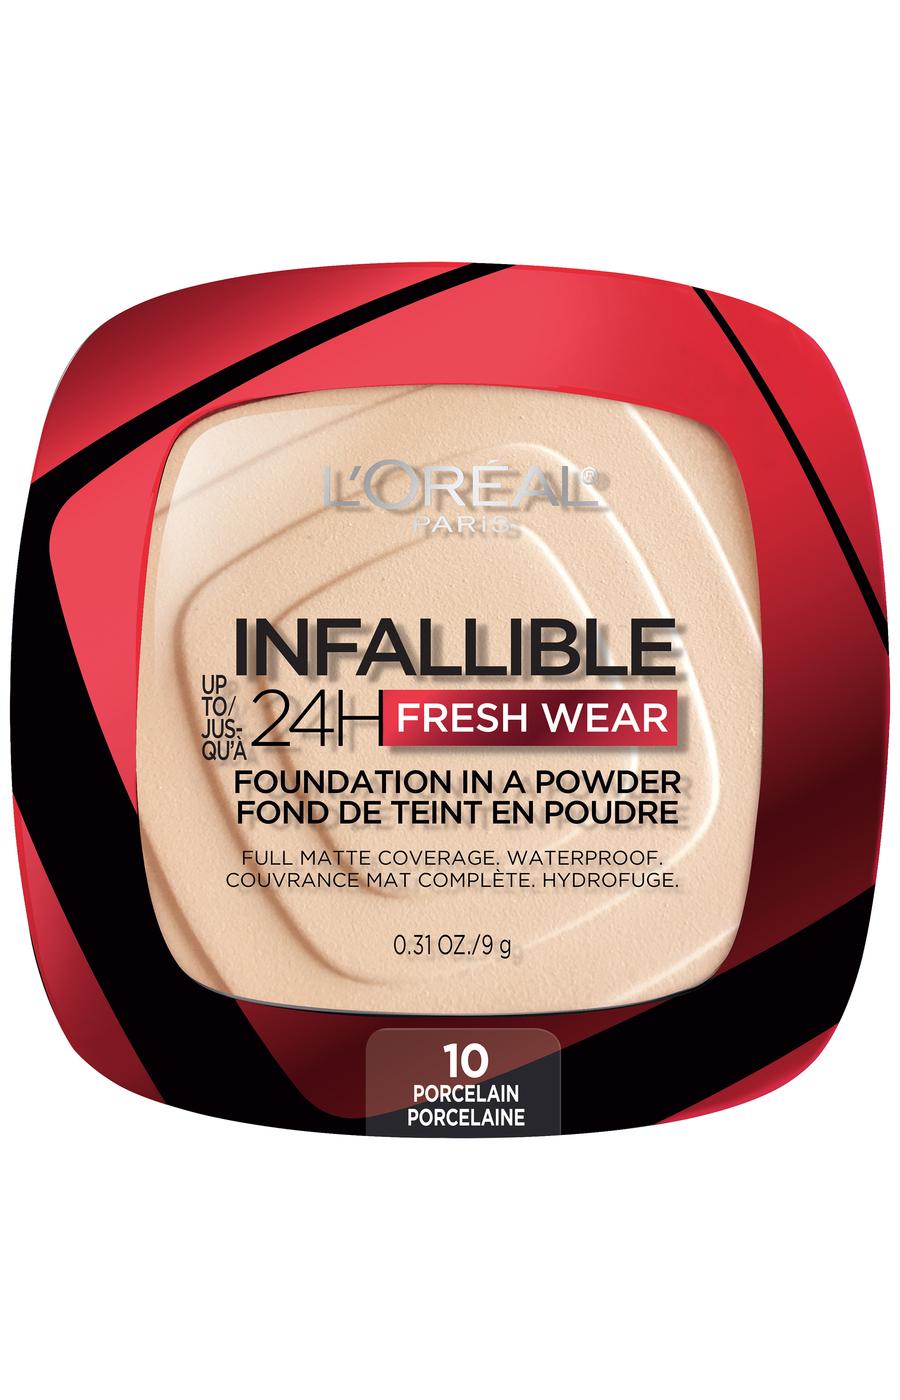 L'Oréal Paris Infallible Up to 24H Fresh Wear Foundation in a Powder Porcelain; image 1 of 4